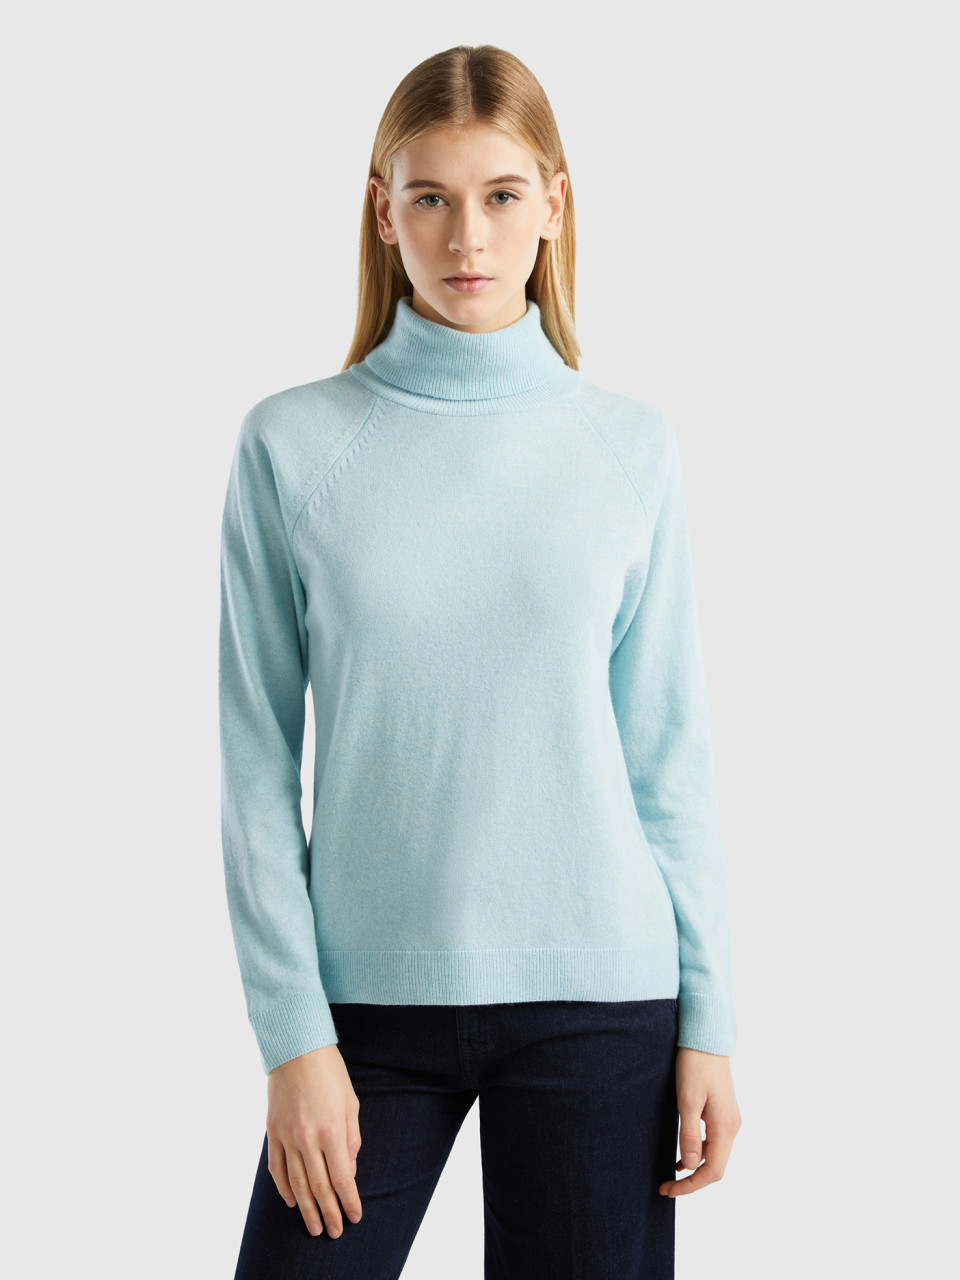 Benetton, Aqua Turtleneck Sweater In Cashmere And Wool Blend, Aqua, Women